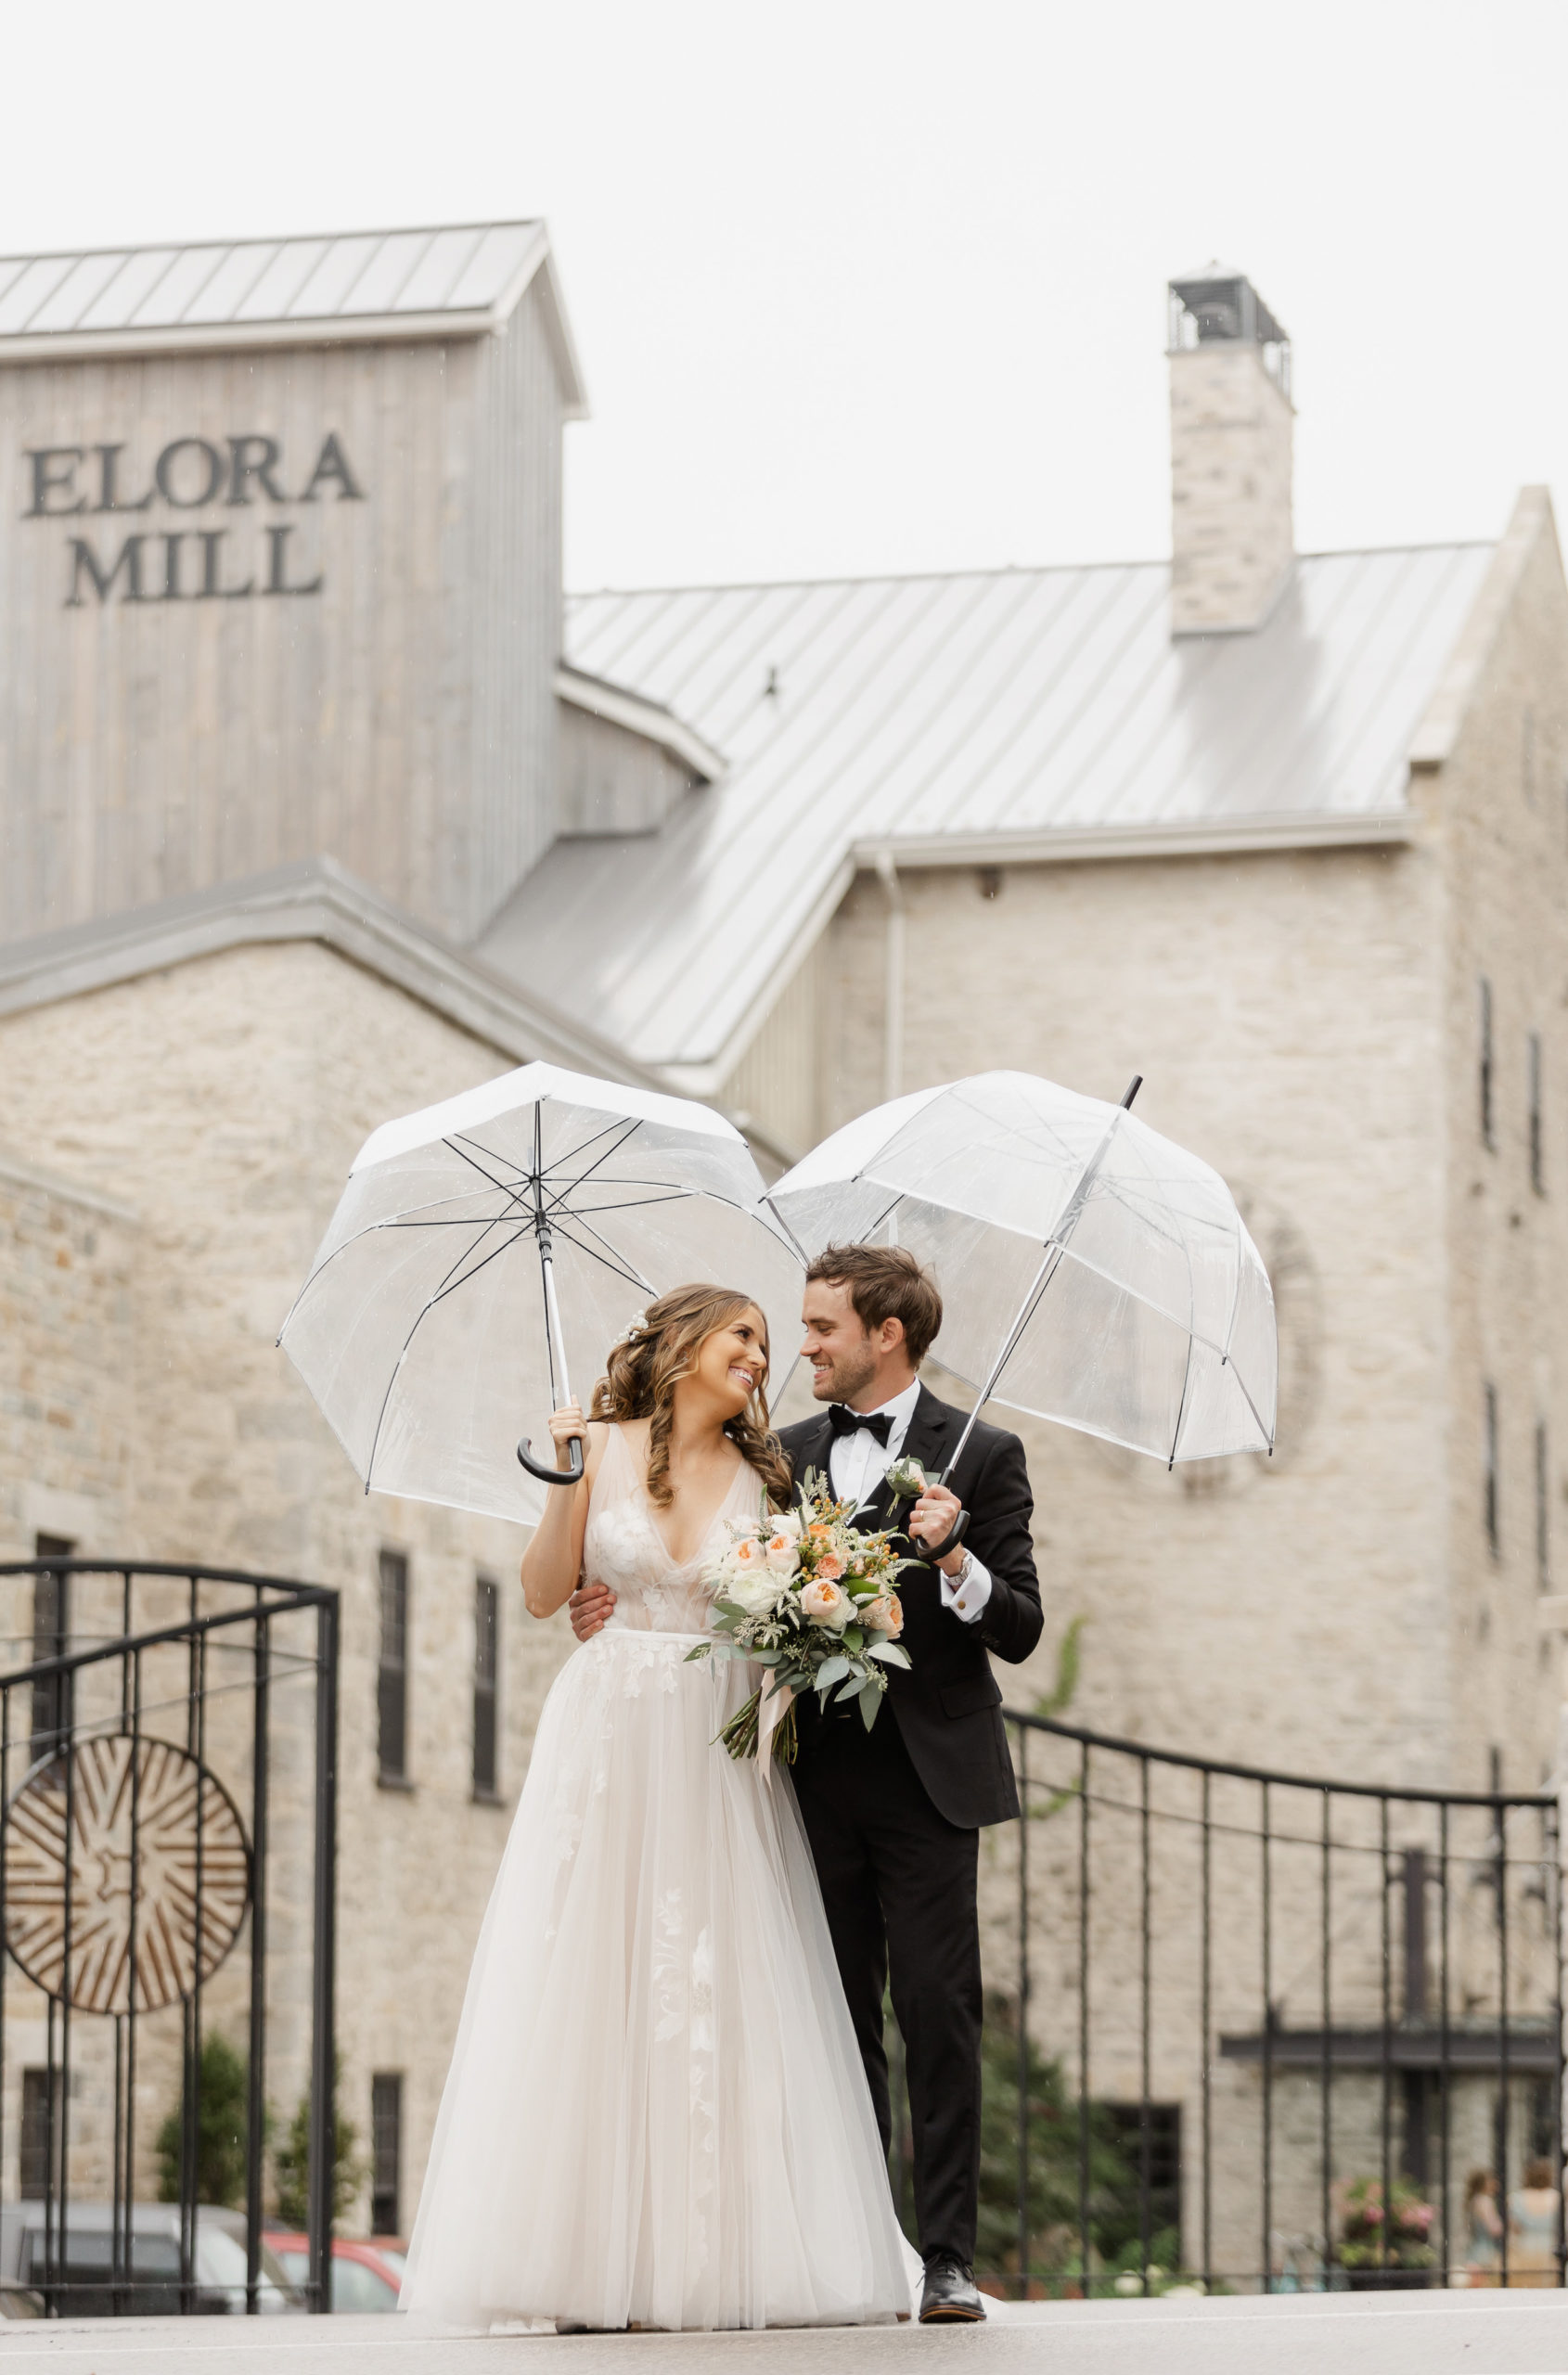 a rainy day wedding at elora mill